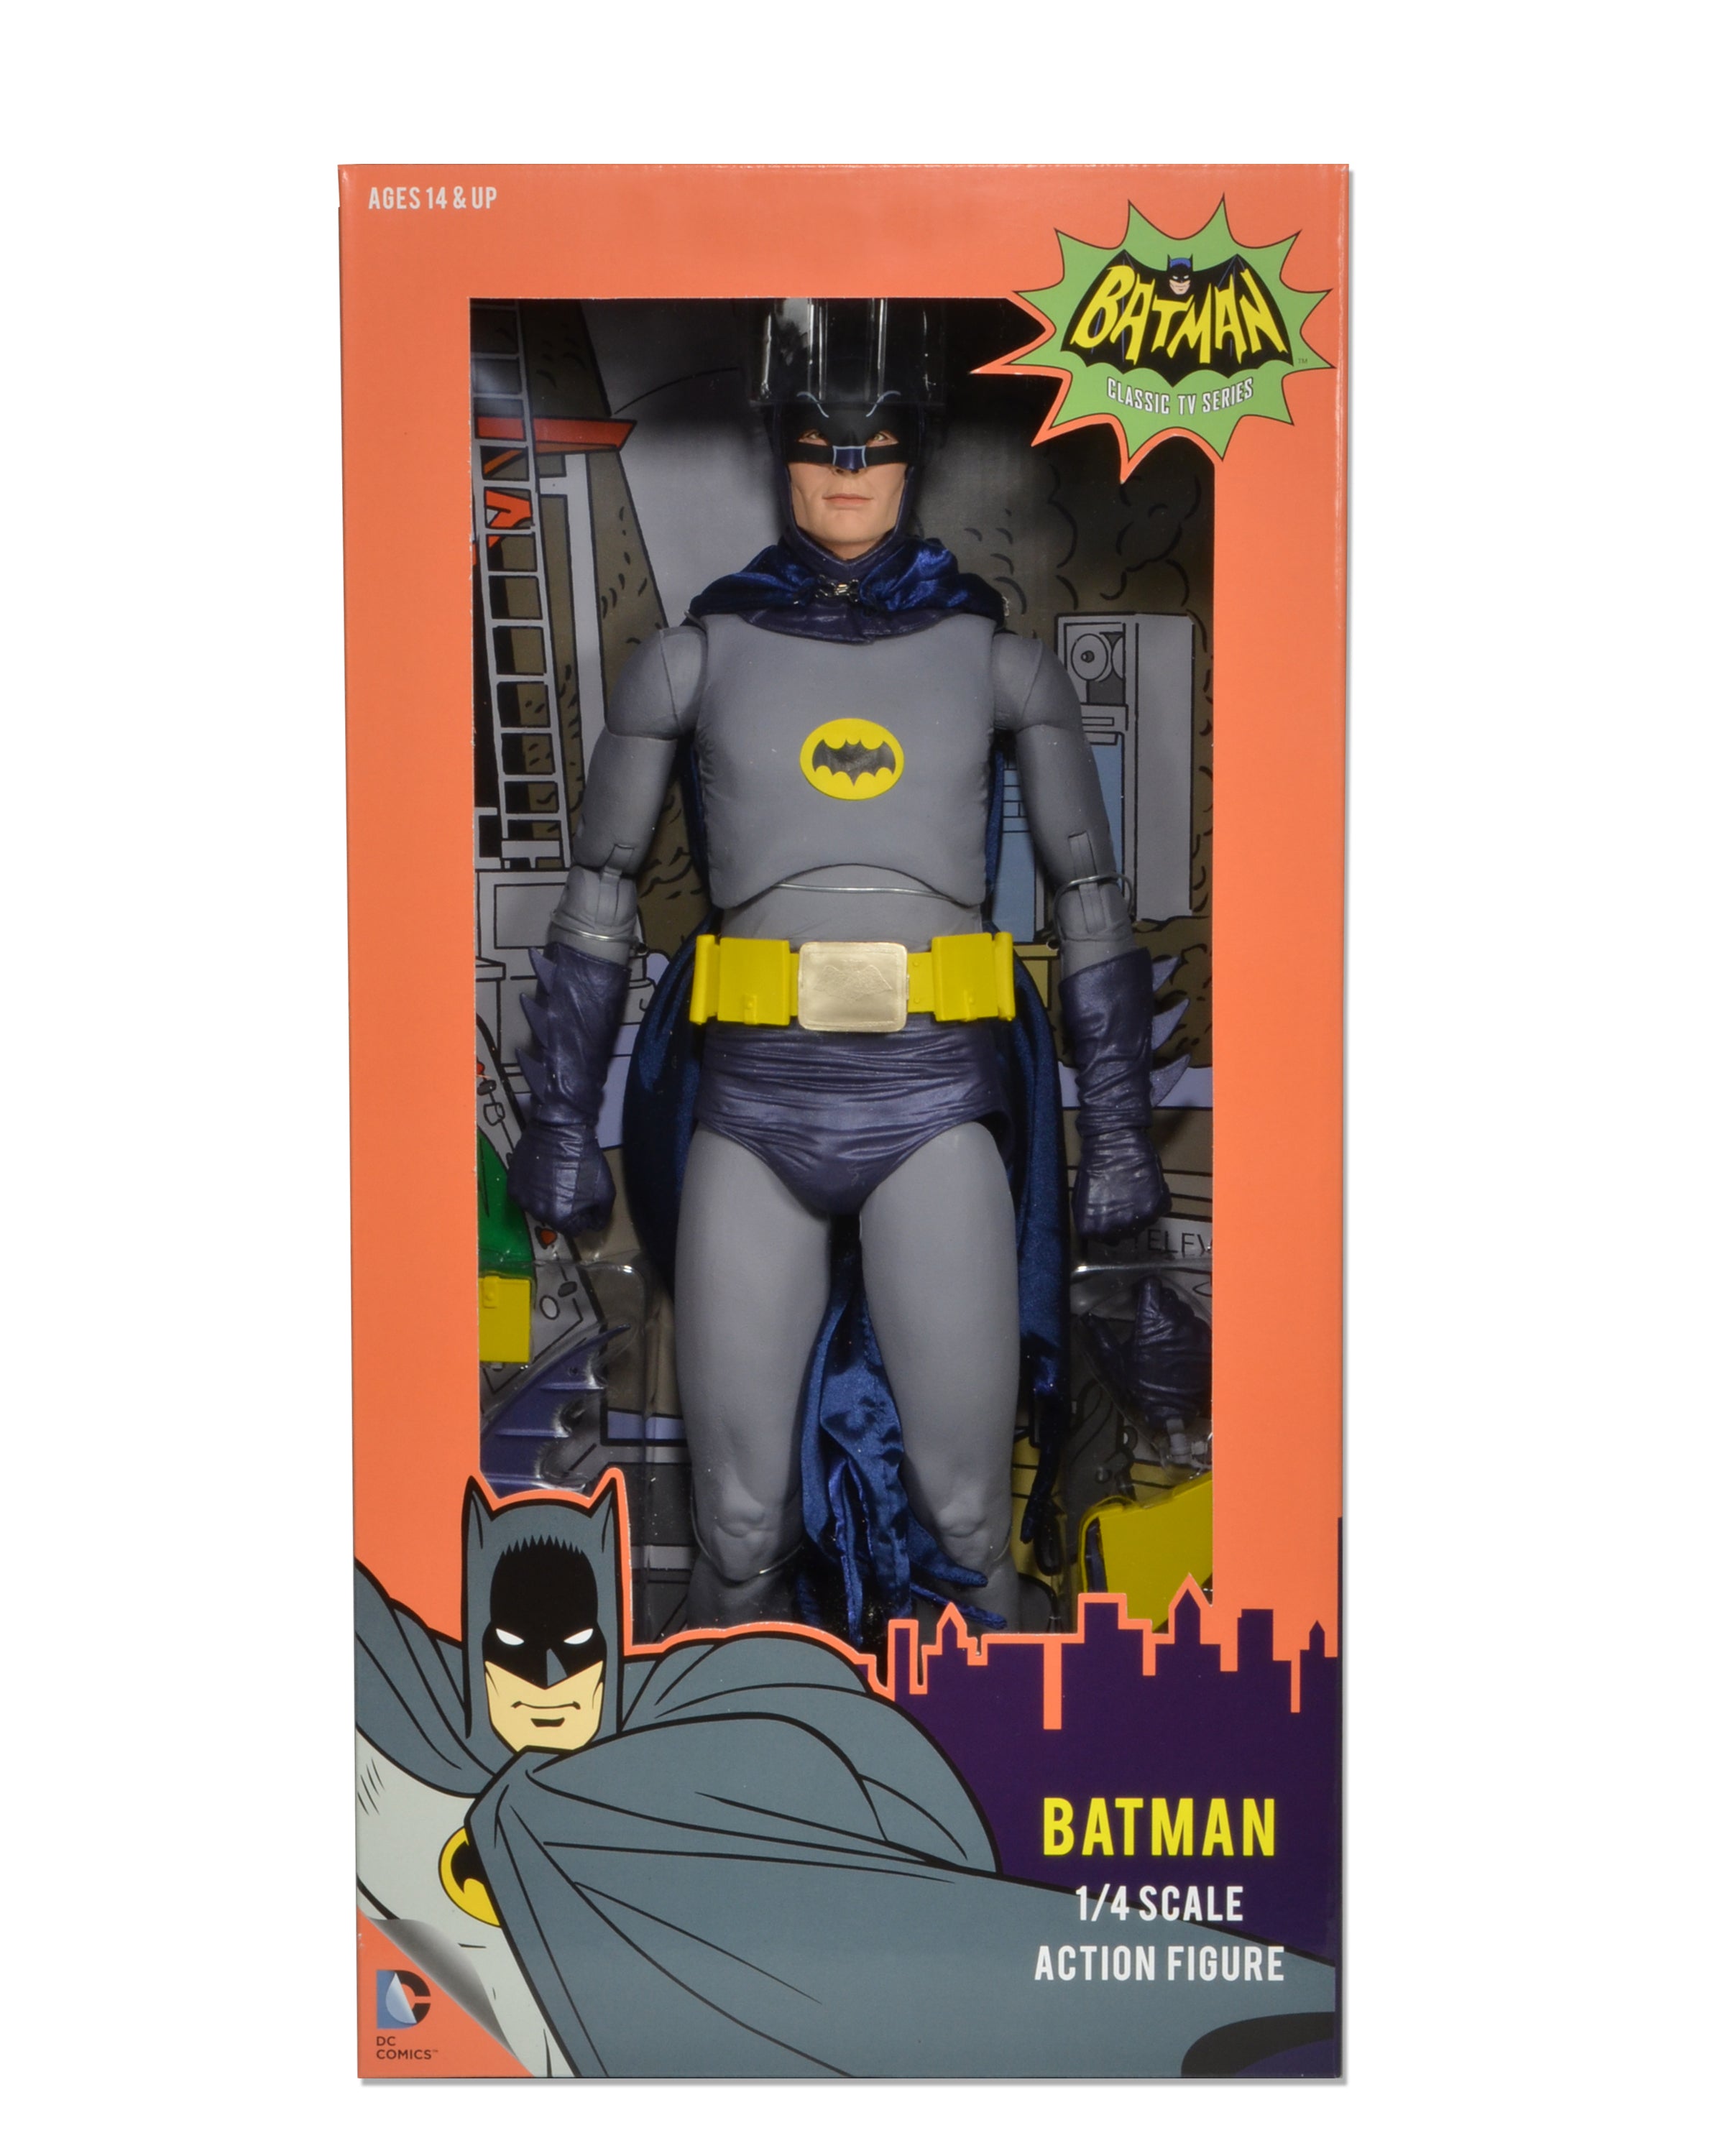 Quarter scale Adam West Batman action figure in box